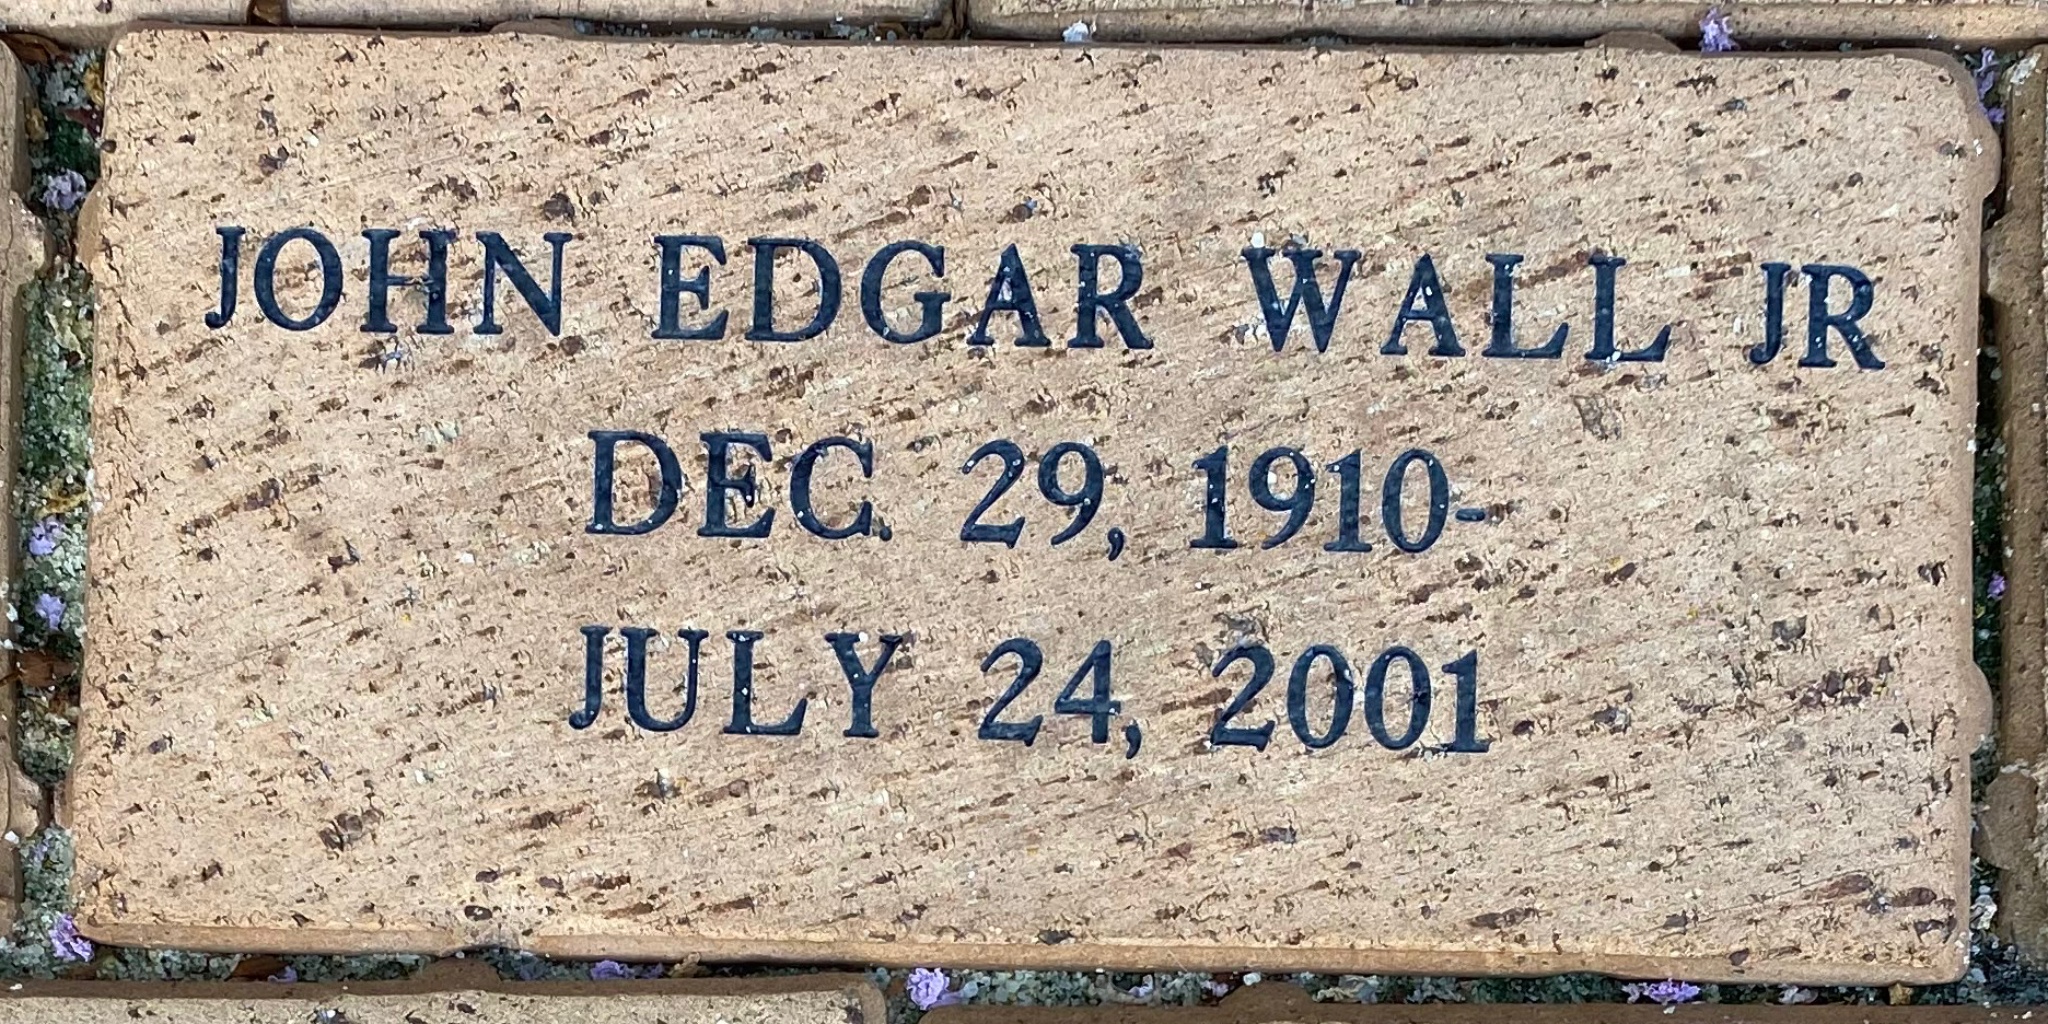 JOHN EDGAR WALL JR DEC. 29,1910- JULY 24, 2001